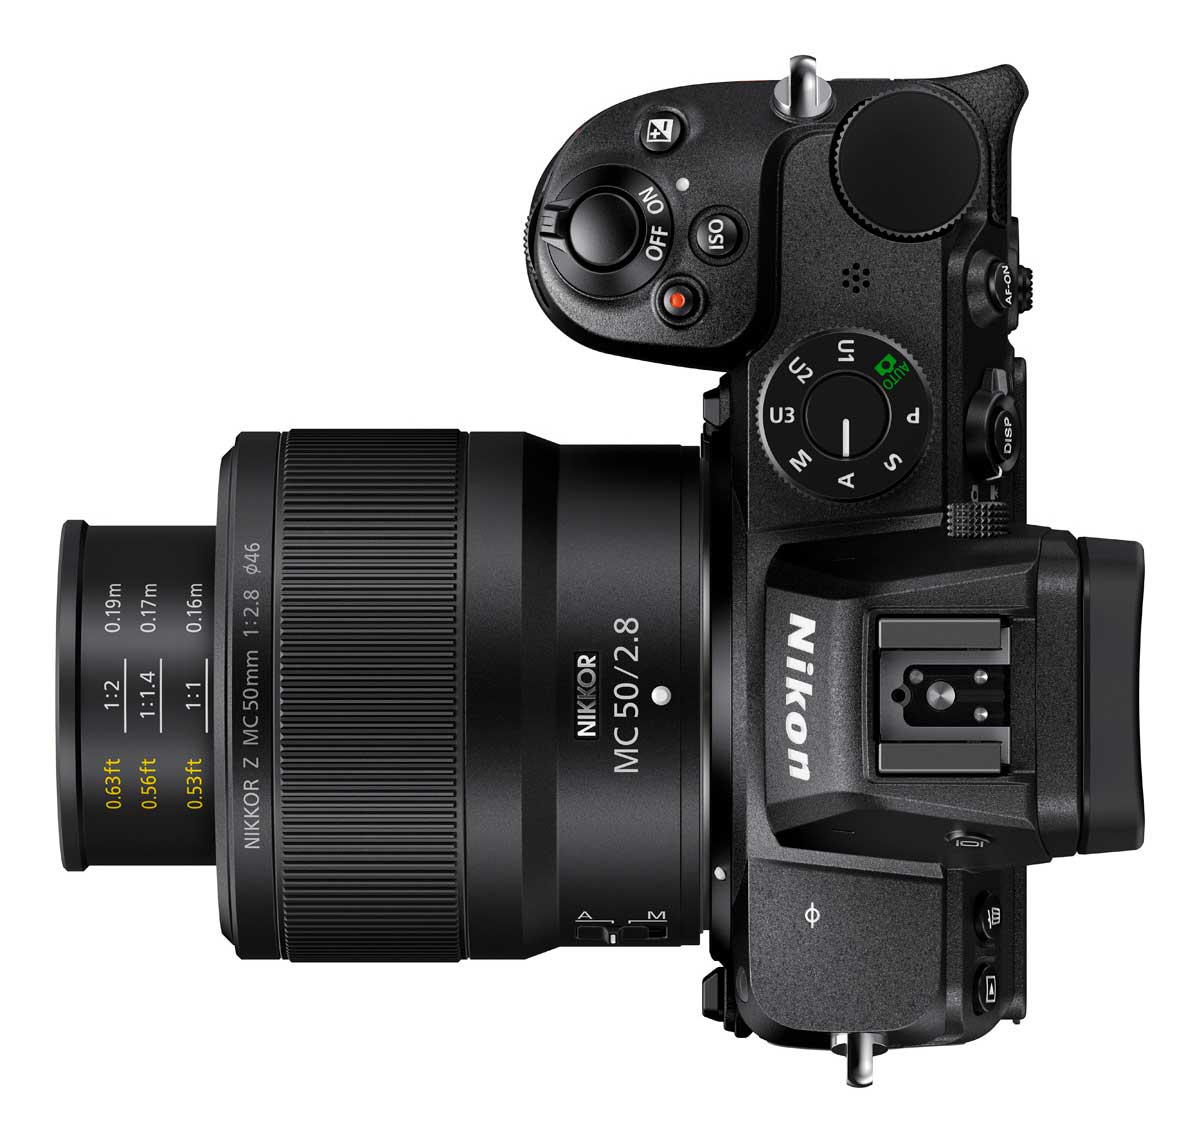 Nikon kündigt erste Makroobjektive für Z-Kameras an